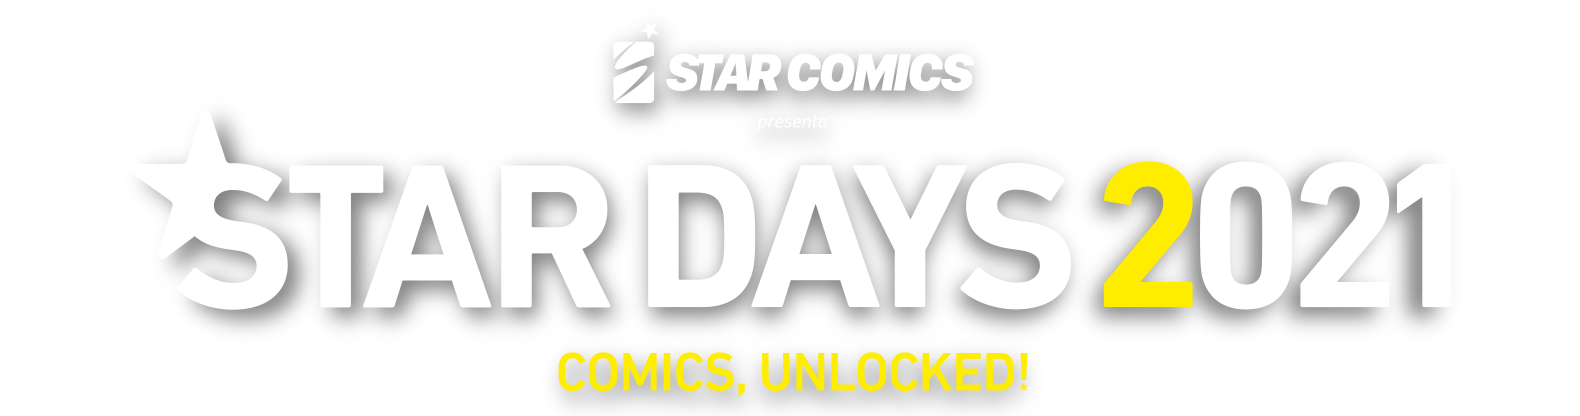 STAR DAYS 2021 | Comics, Unlocked!